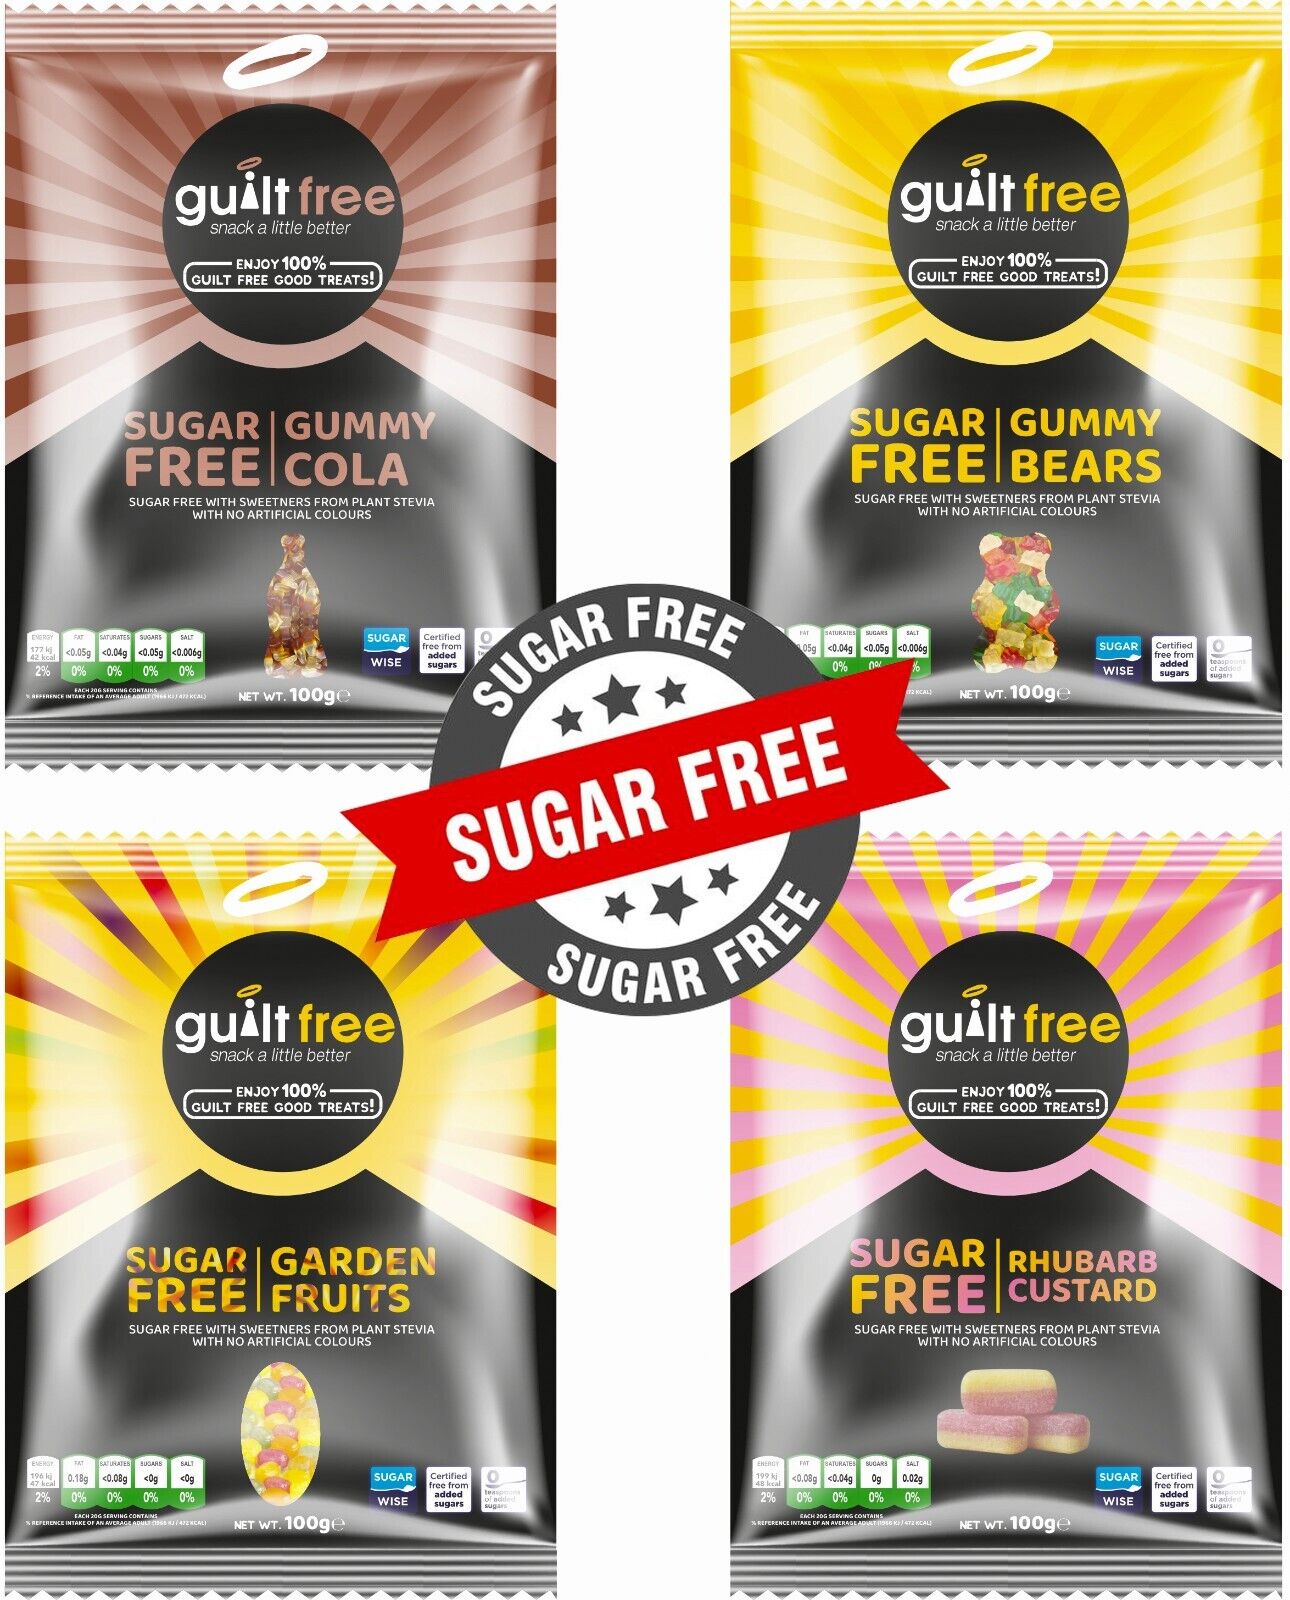 GuiltFree Sugar Free Sweets / Gummies / Lollipop - 4 x 100g